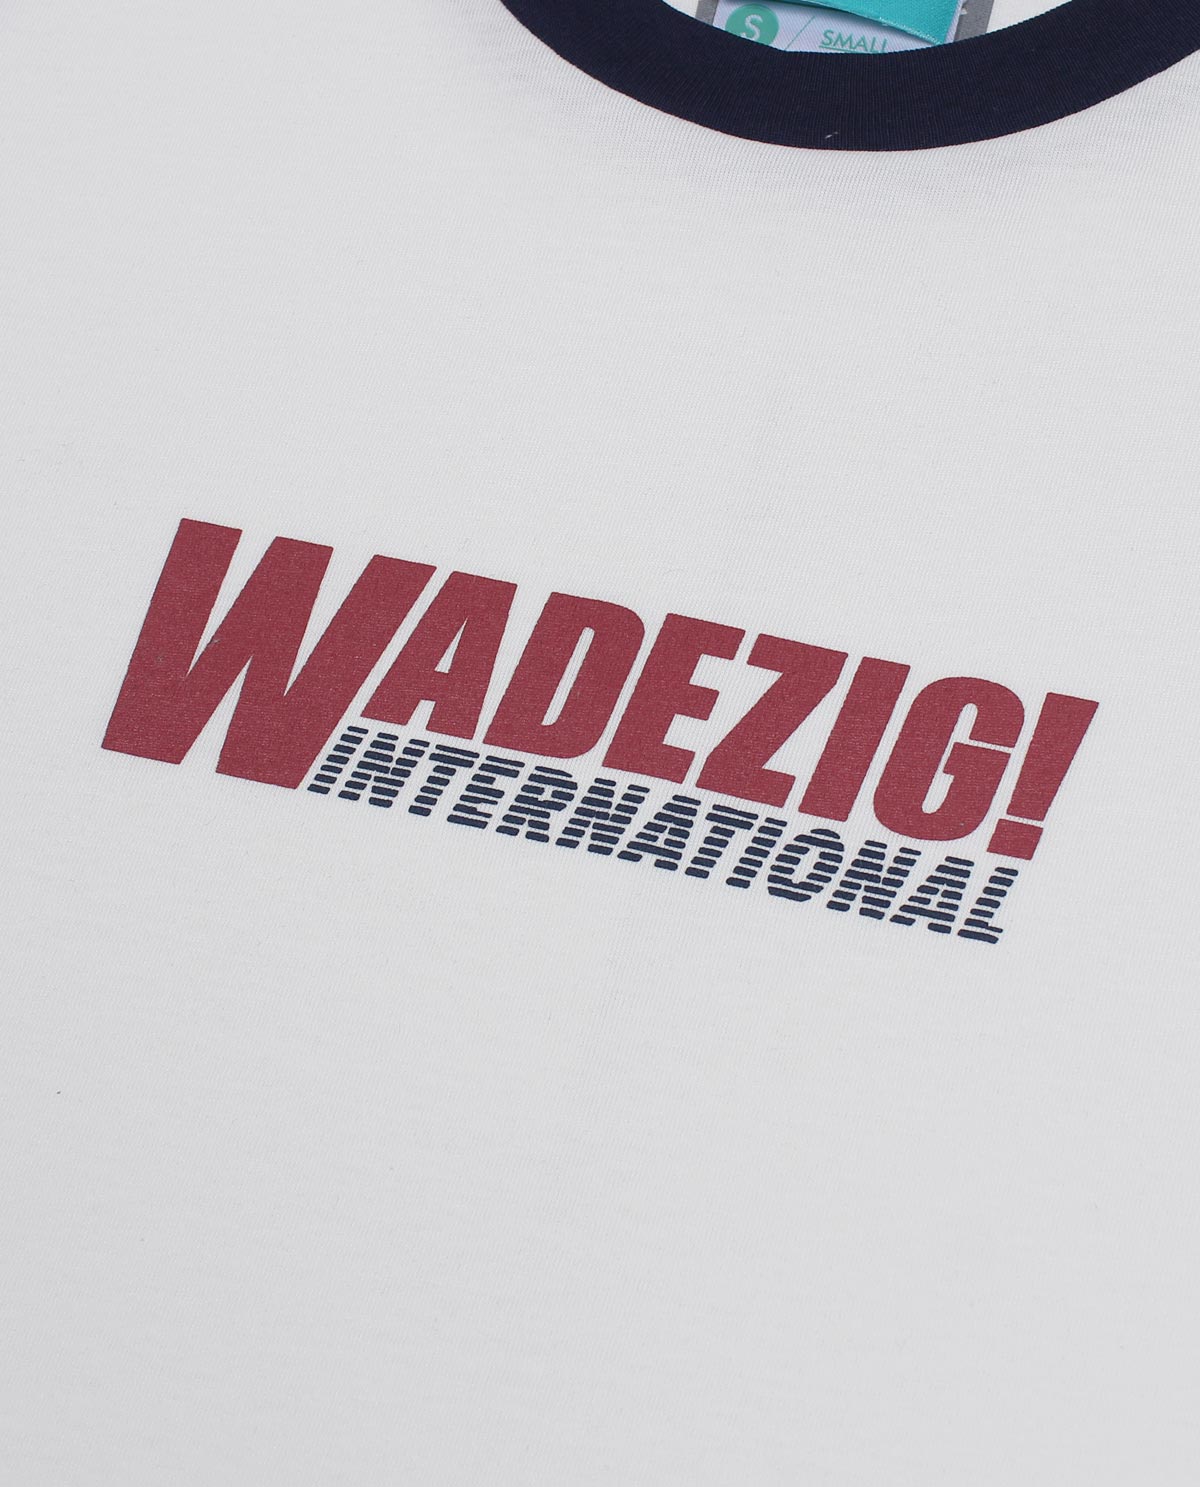 Wadezig! T-Shirt - International Rgln